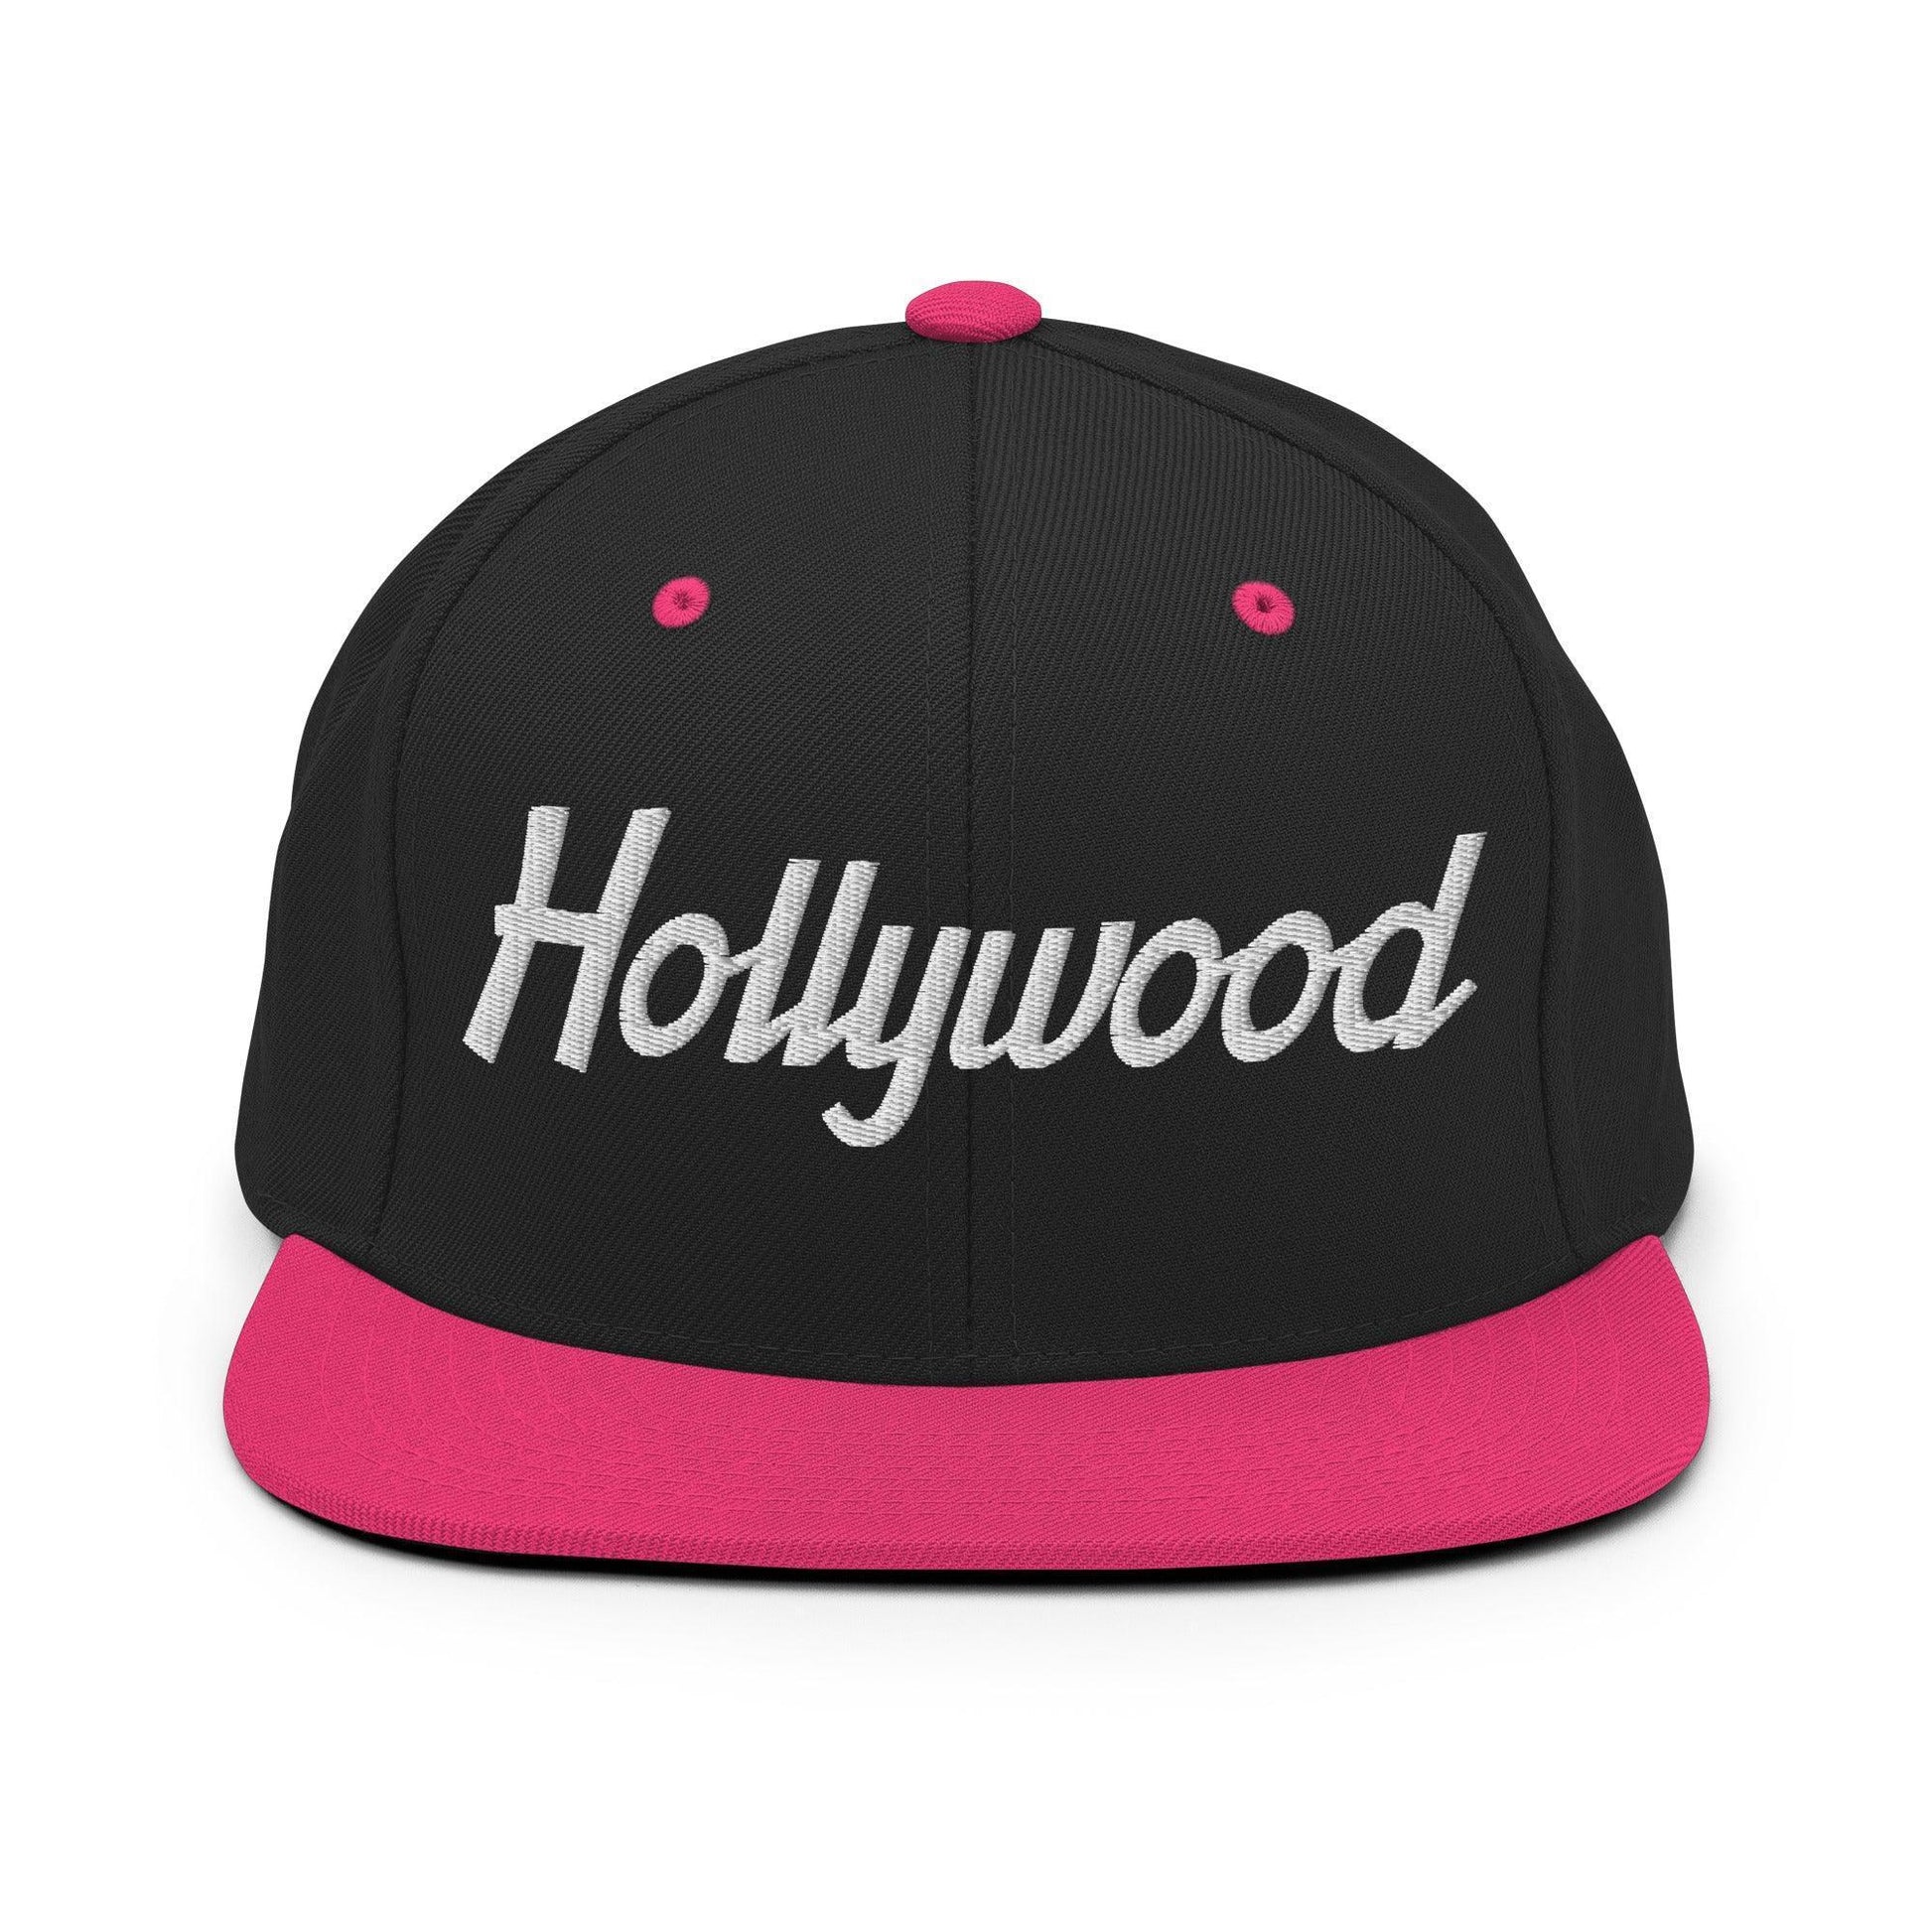 Hollywood Script Snapback Hat Black/ Neon Pink